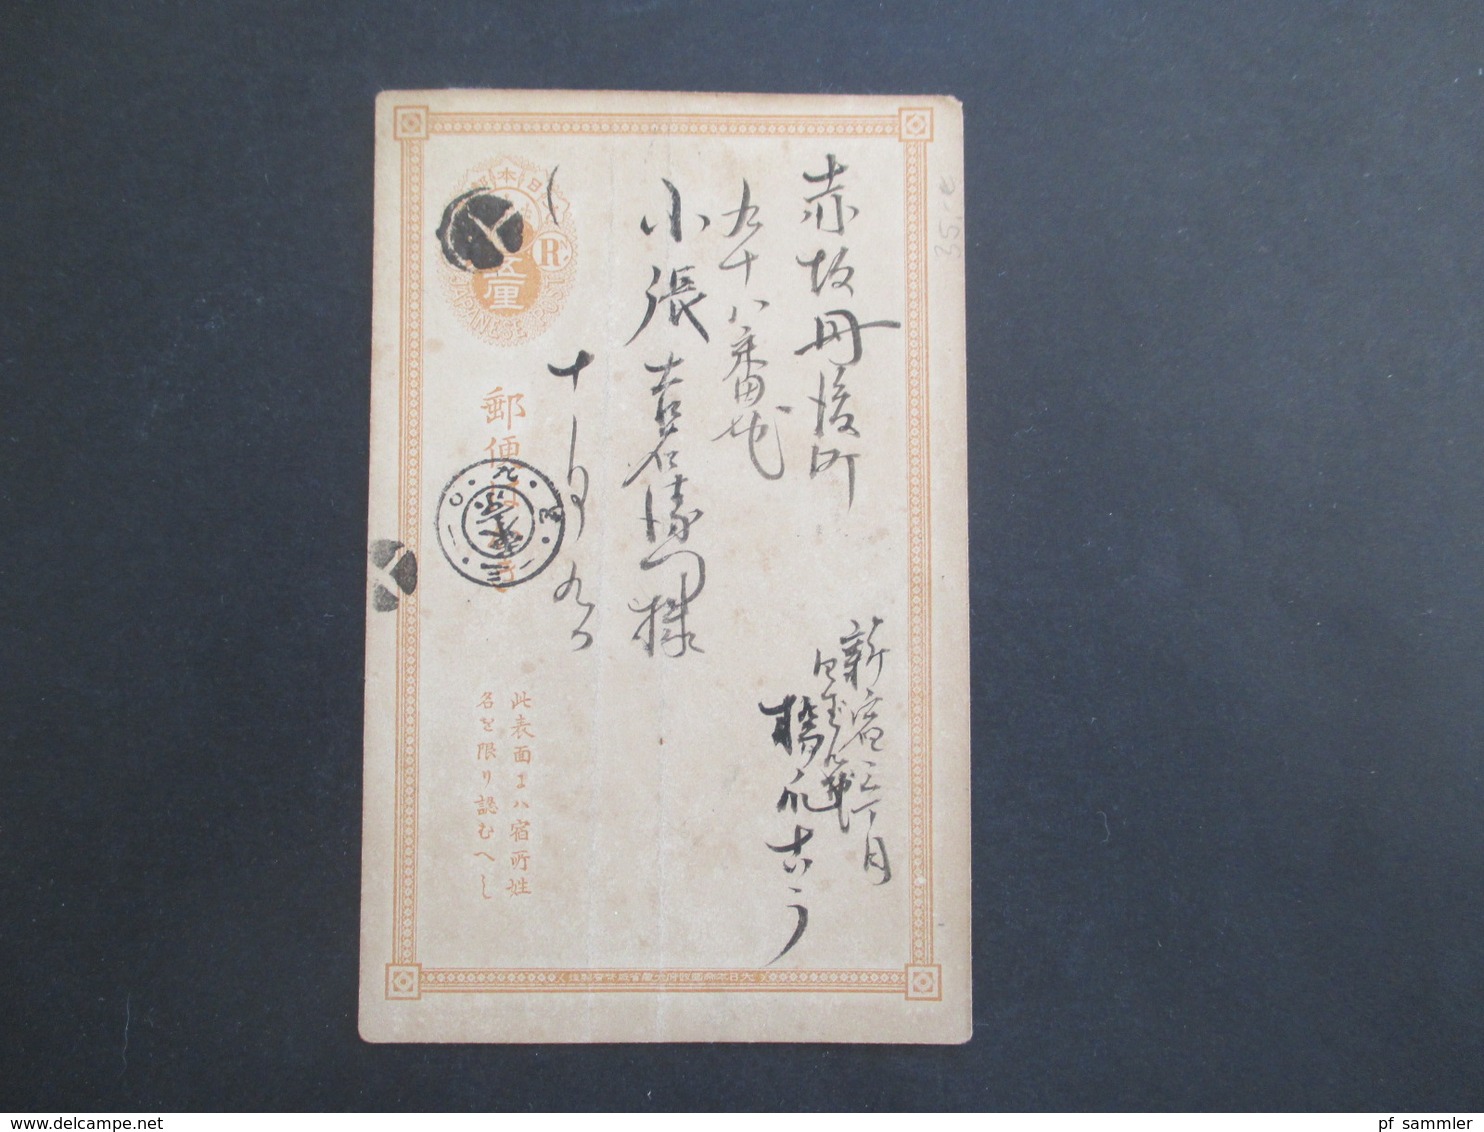 Japan Alte Ganzsache 3 Stempel Japanese Post - Covers & Documents